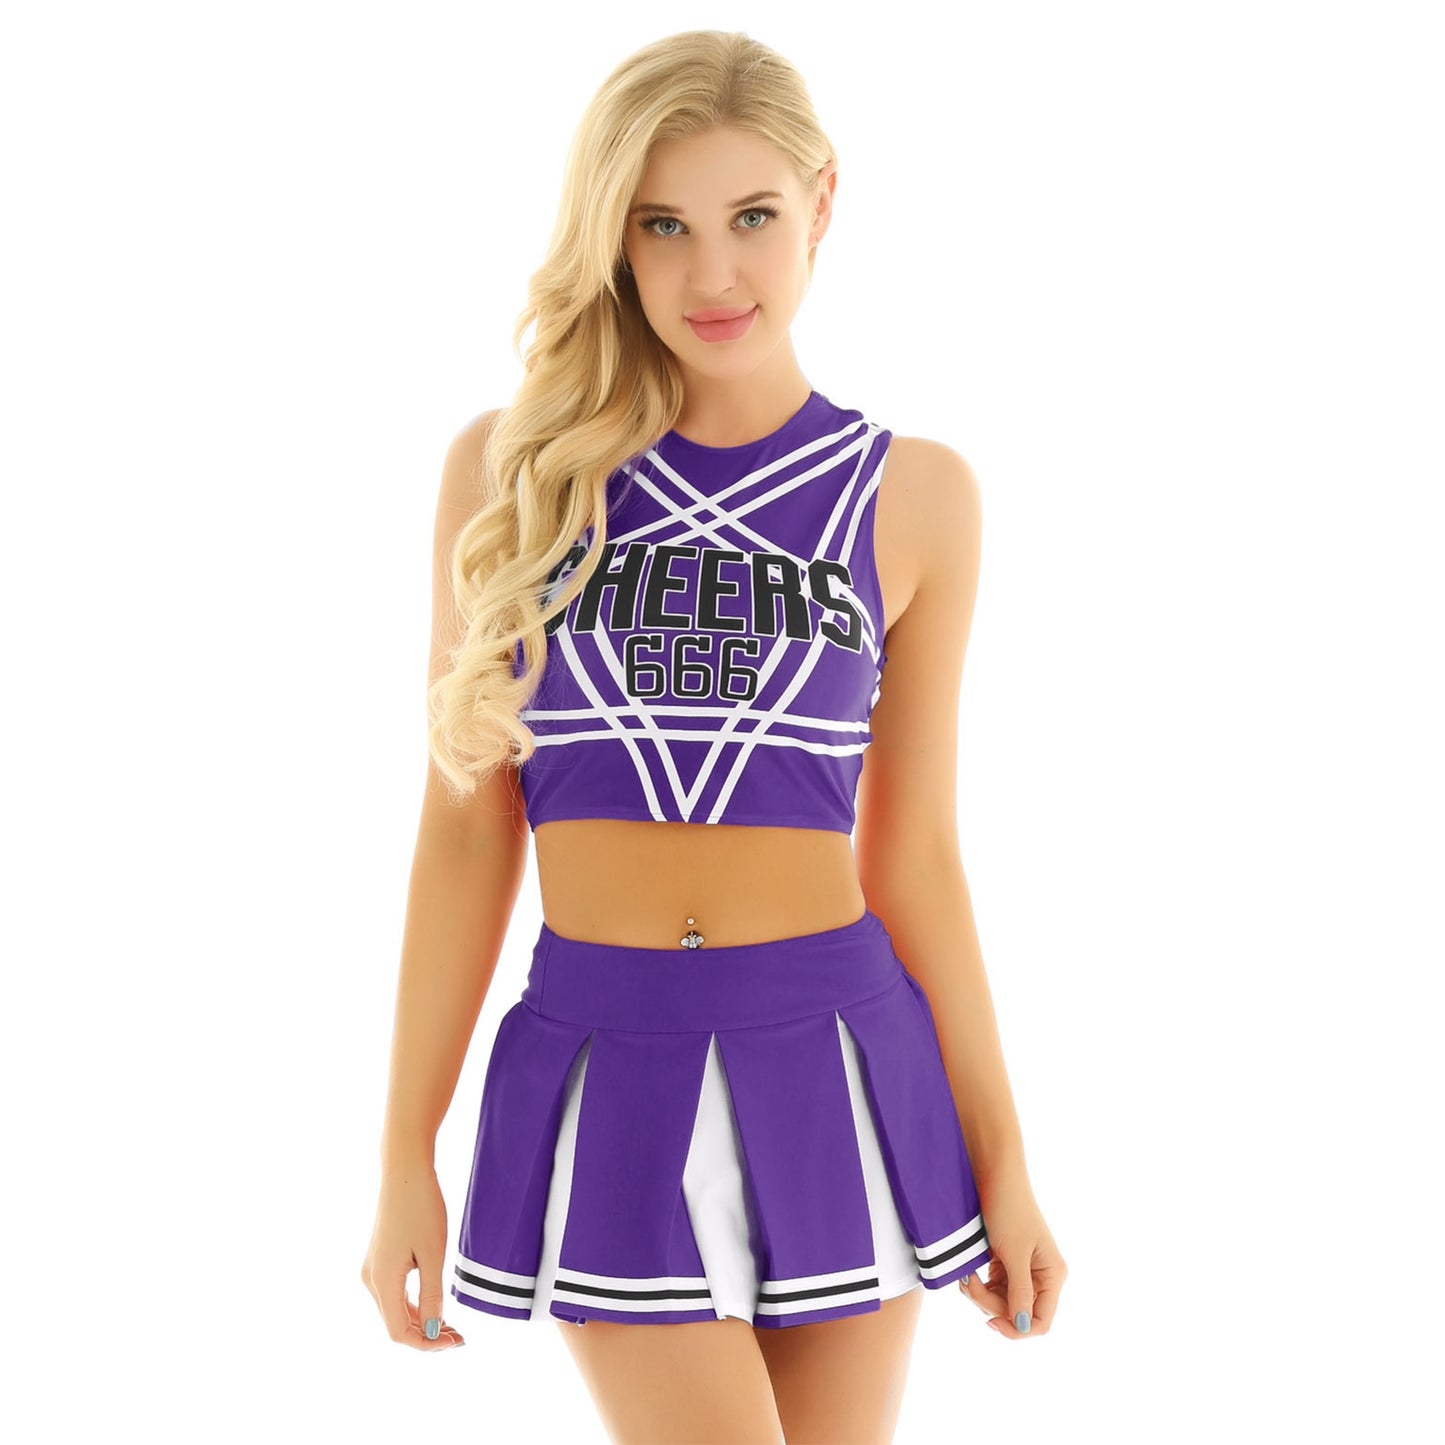 Sexy Cheerleader Cosplay Uniform Hot Student Costume